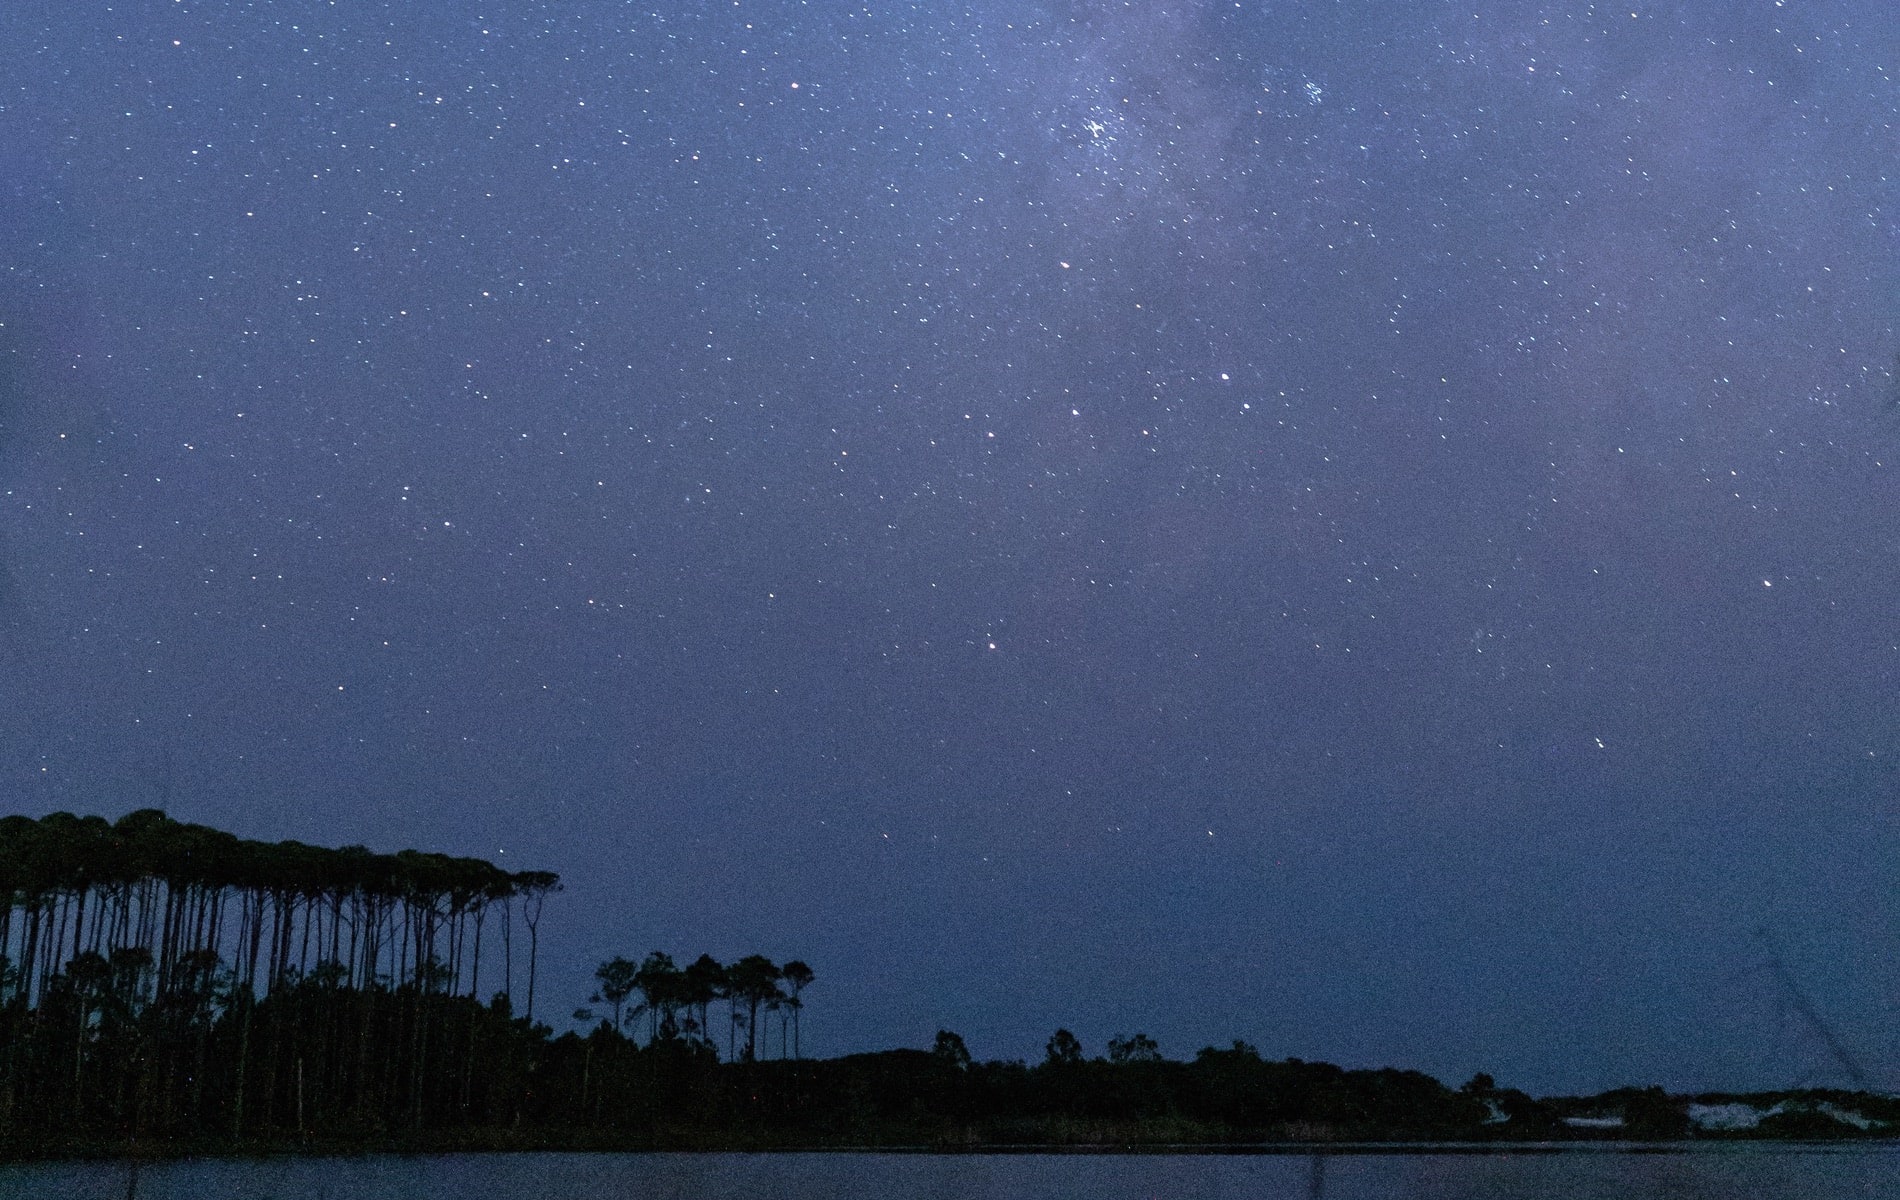 Grayton Beach Florida, Grayton Beach, Western Lake, Milky Way, 30A